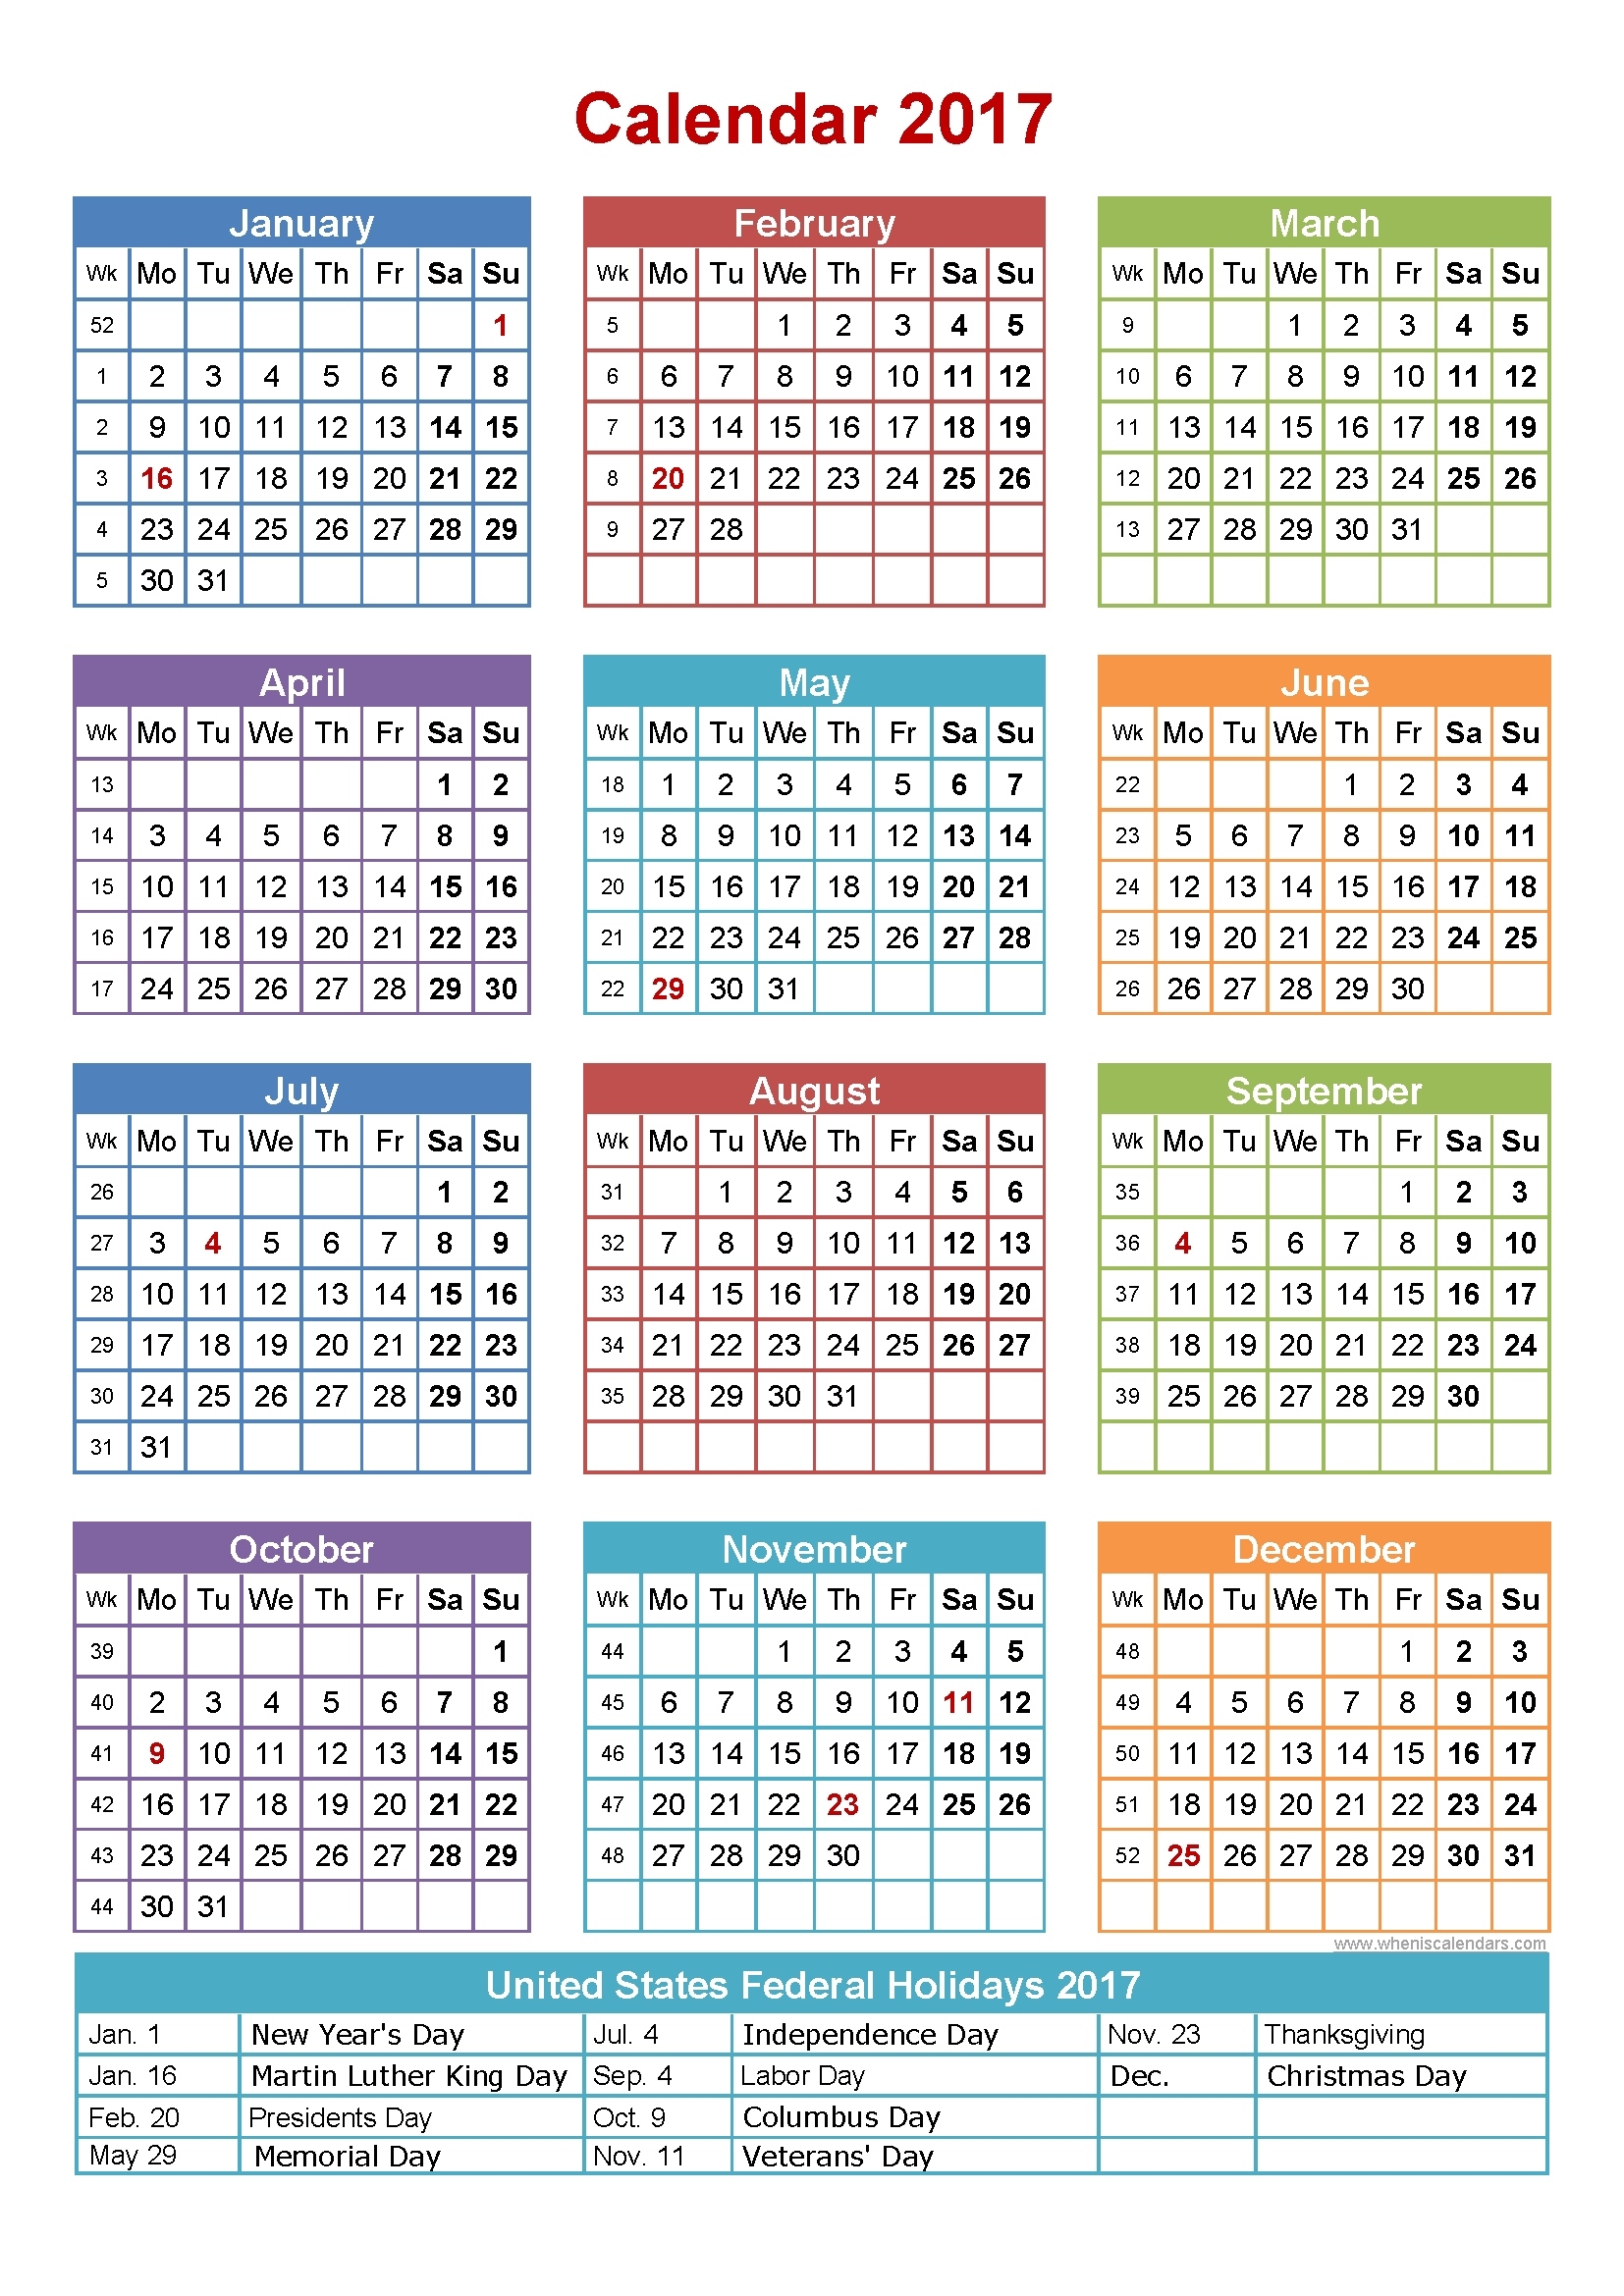 Free Printable 2017 Calendar With Holidays | Aaron The Artist Free Calendar With Holidays